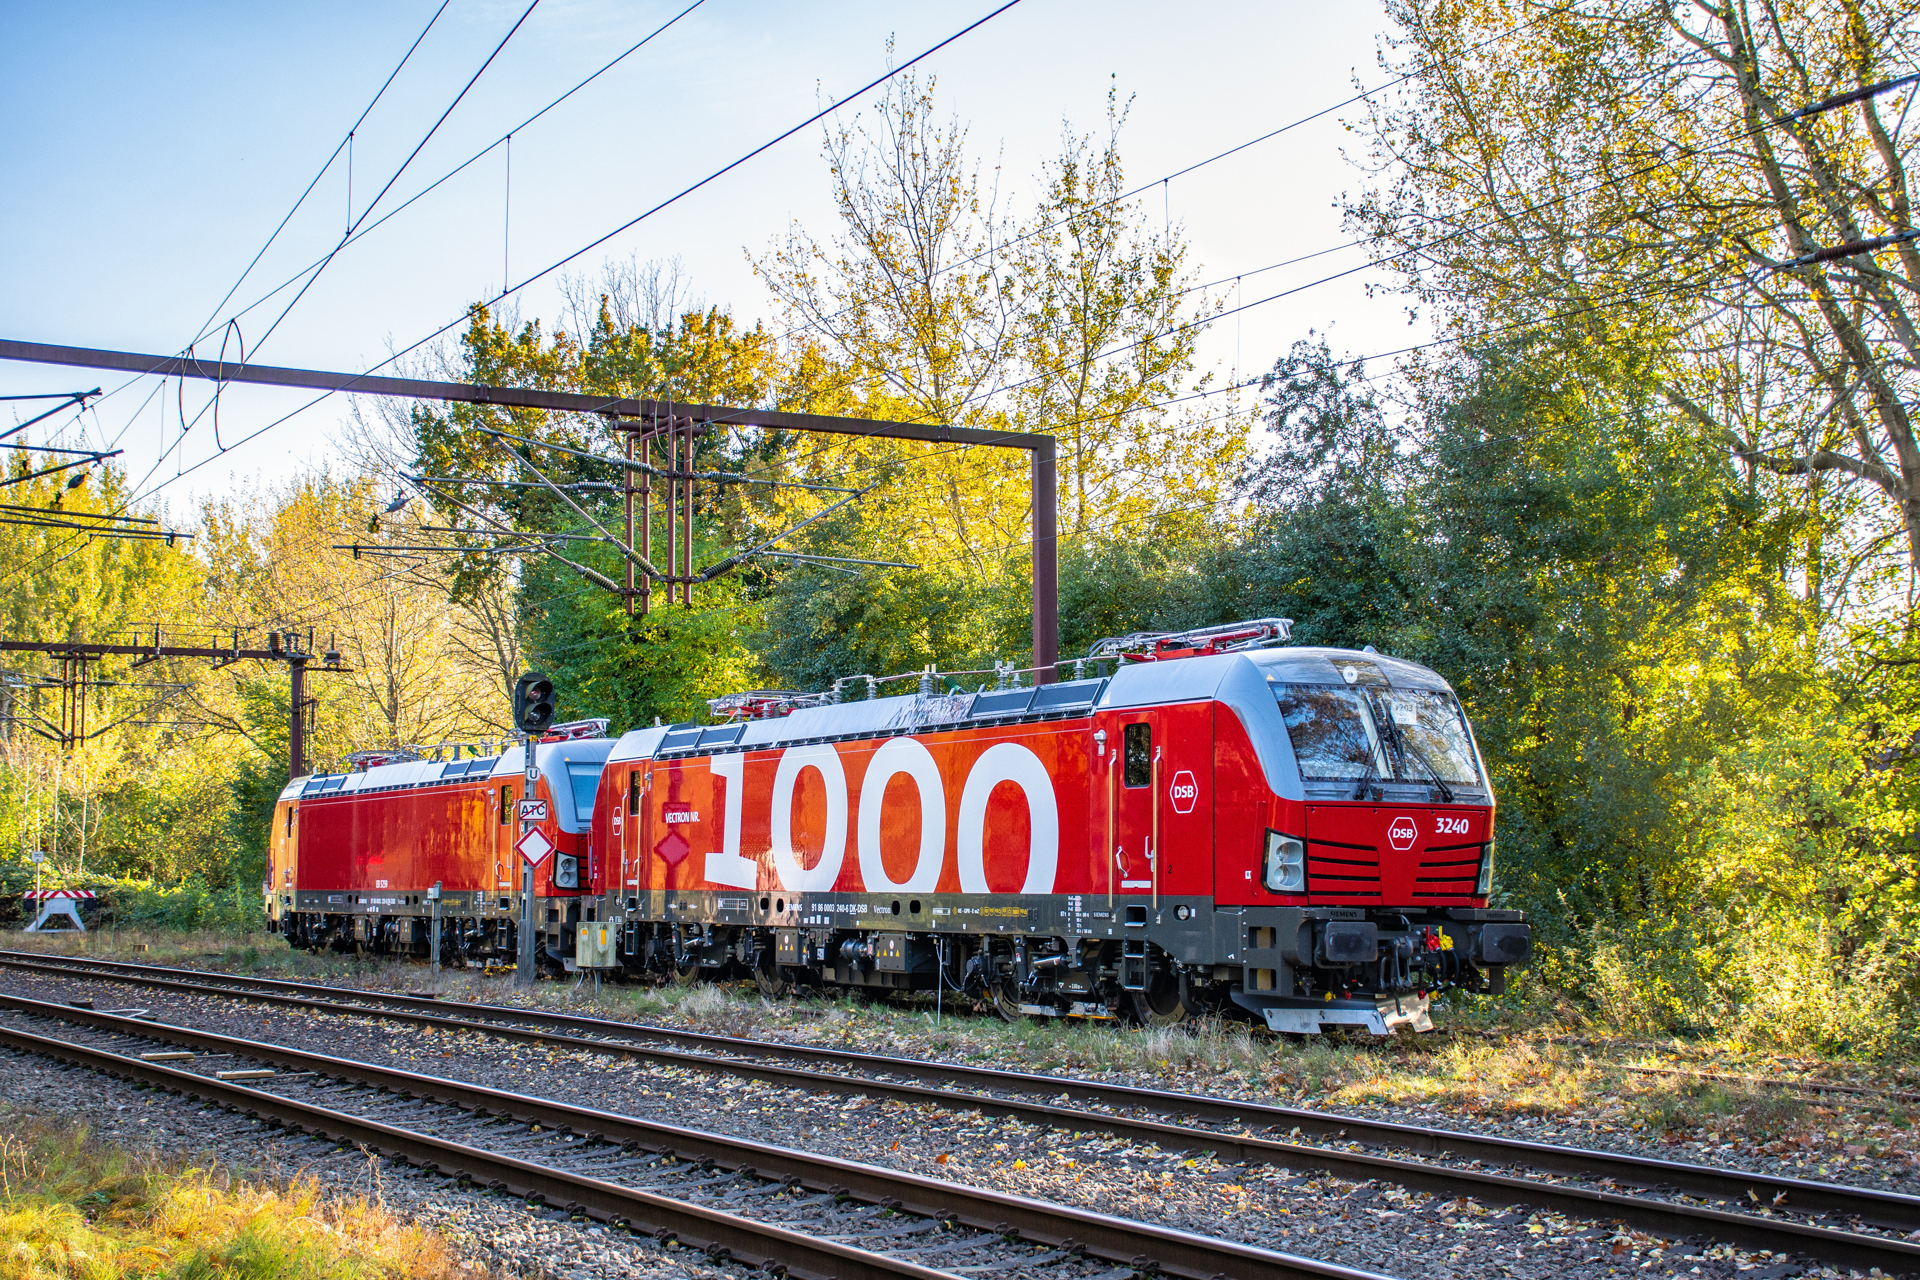 Siemens Mobility celebrates 1000th Vectron locomotive